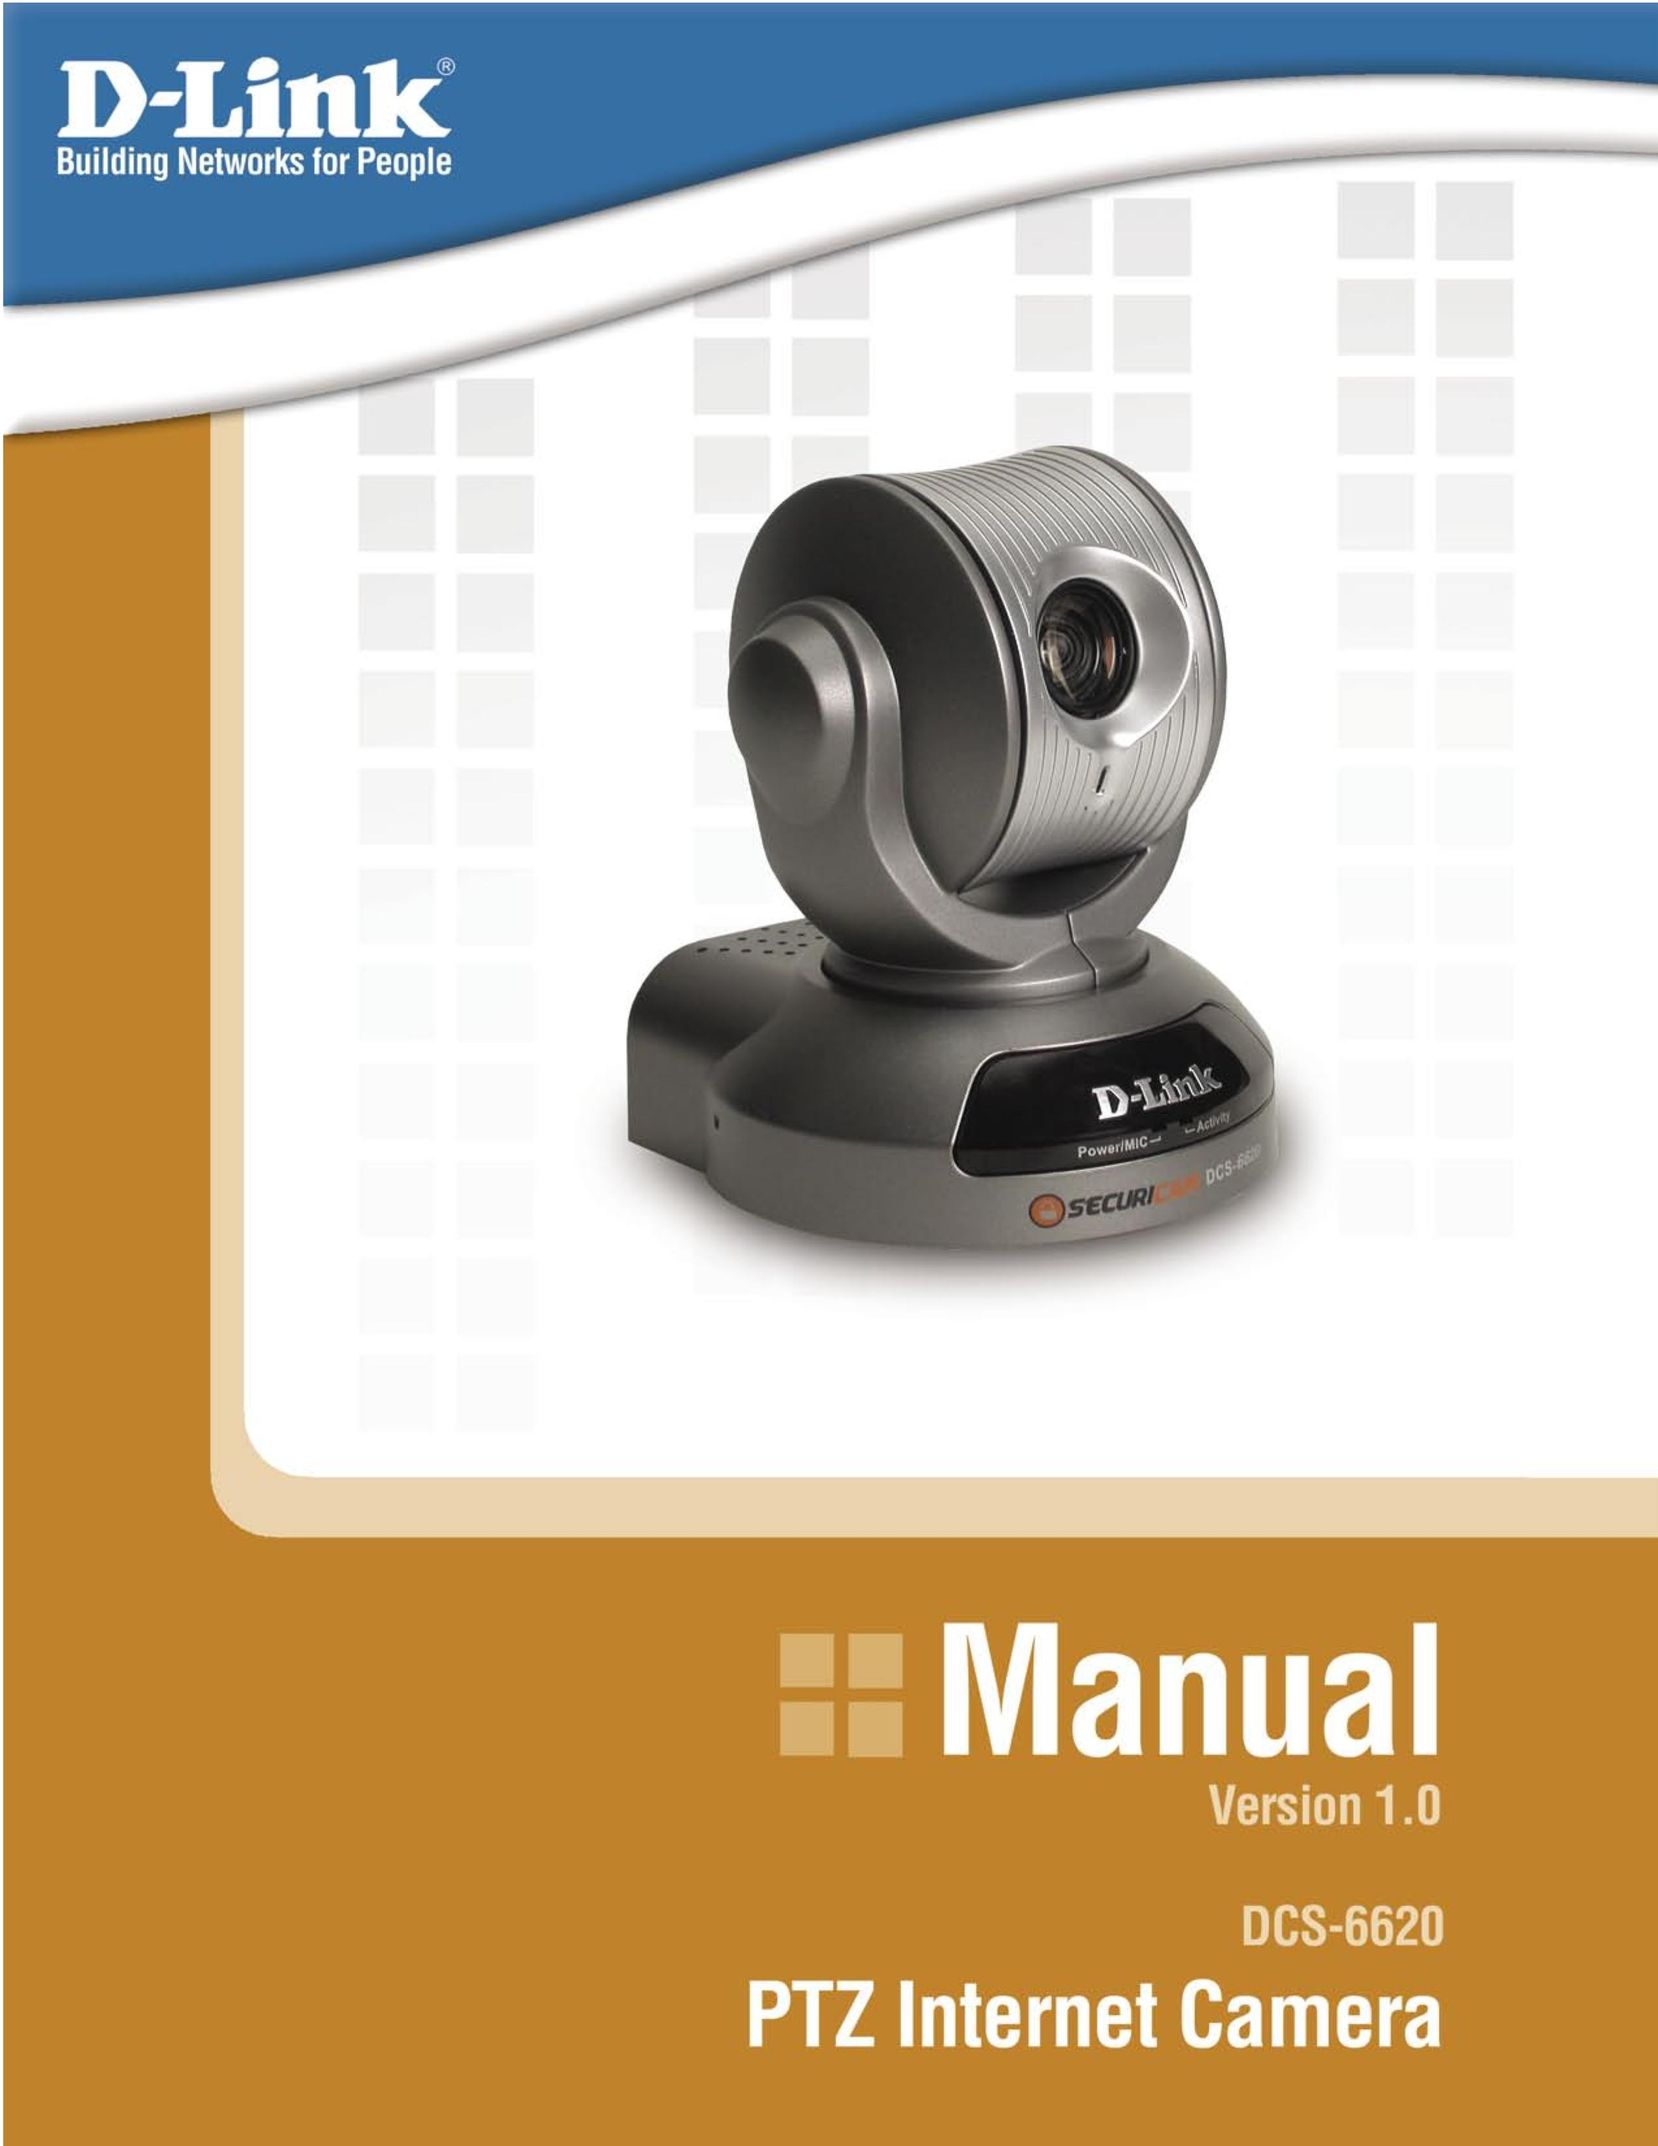 D-Link DSC-6620 Webcam User Manual